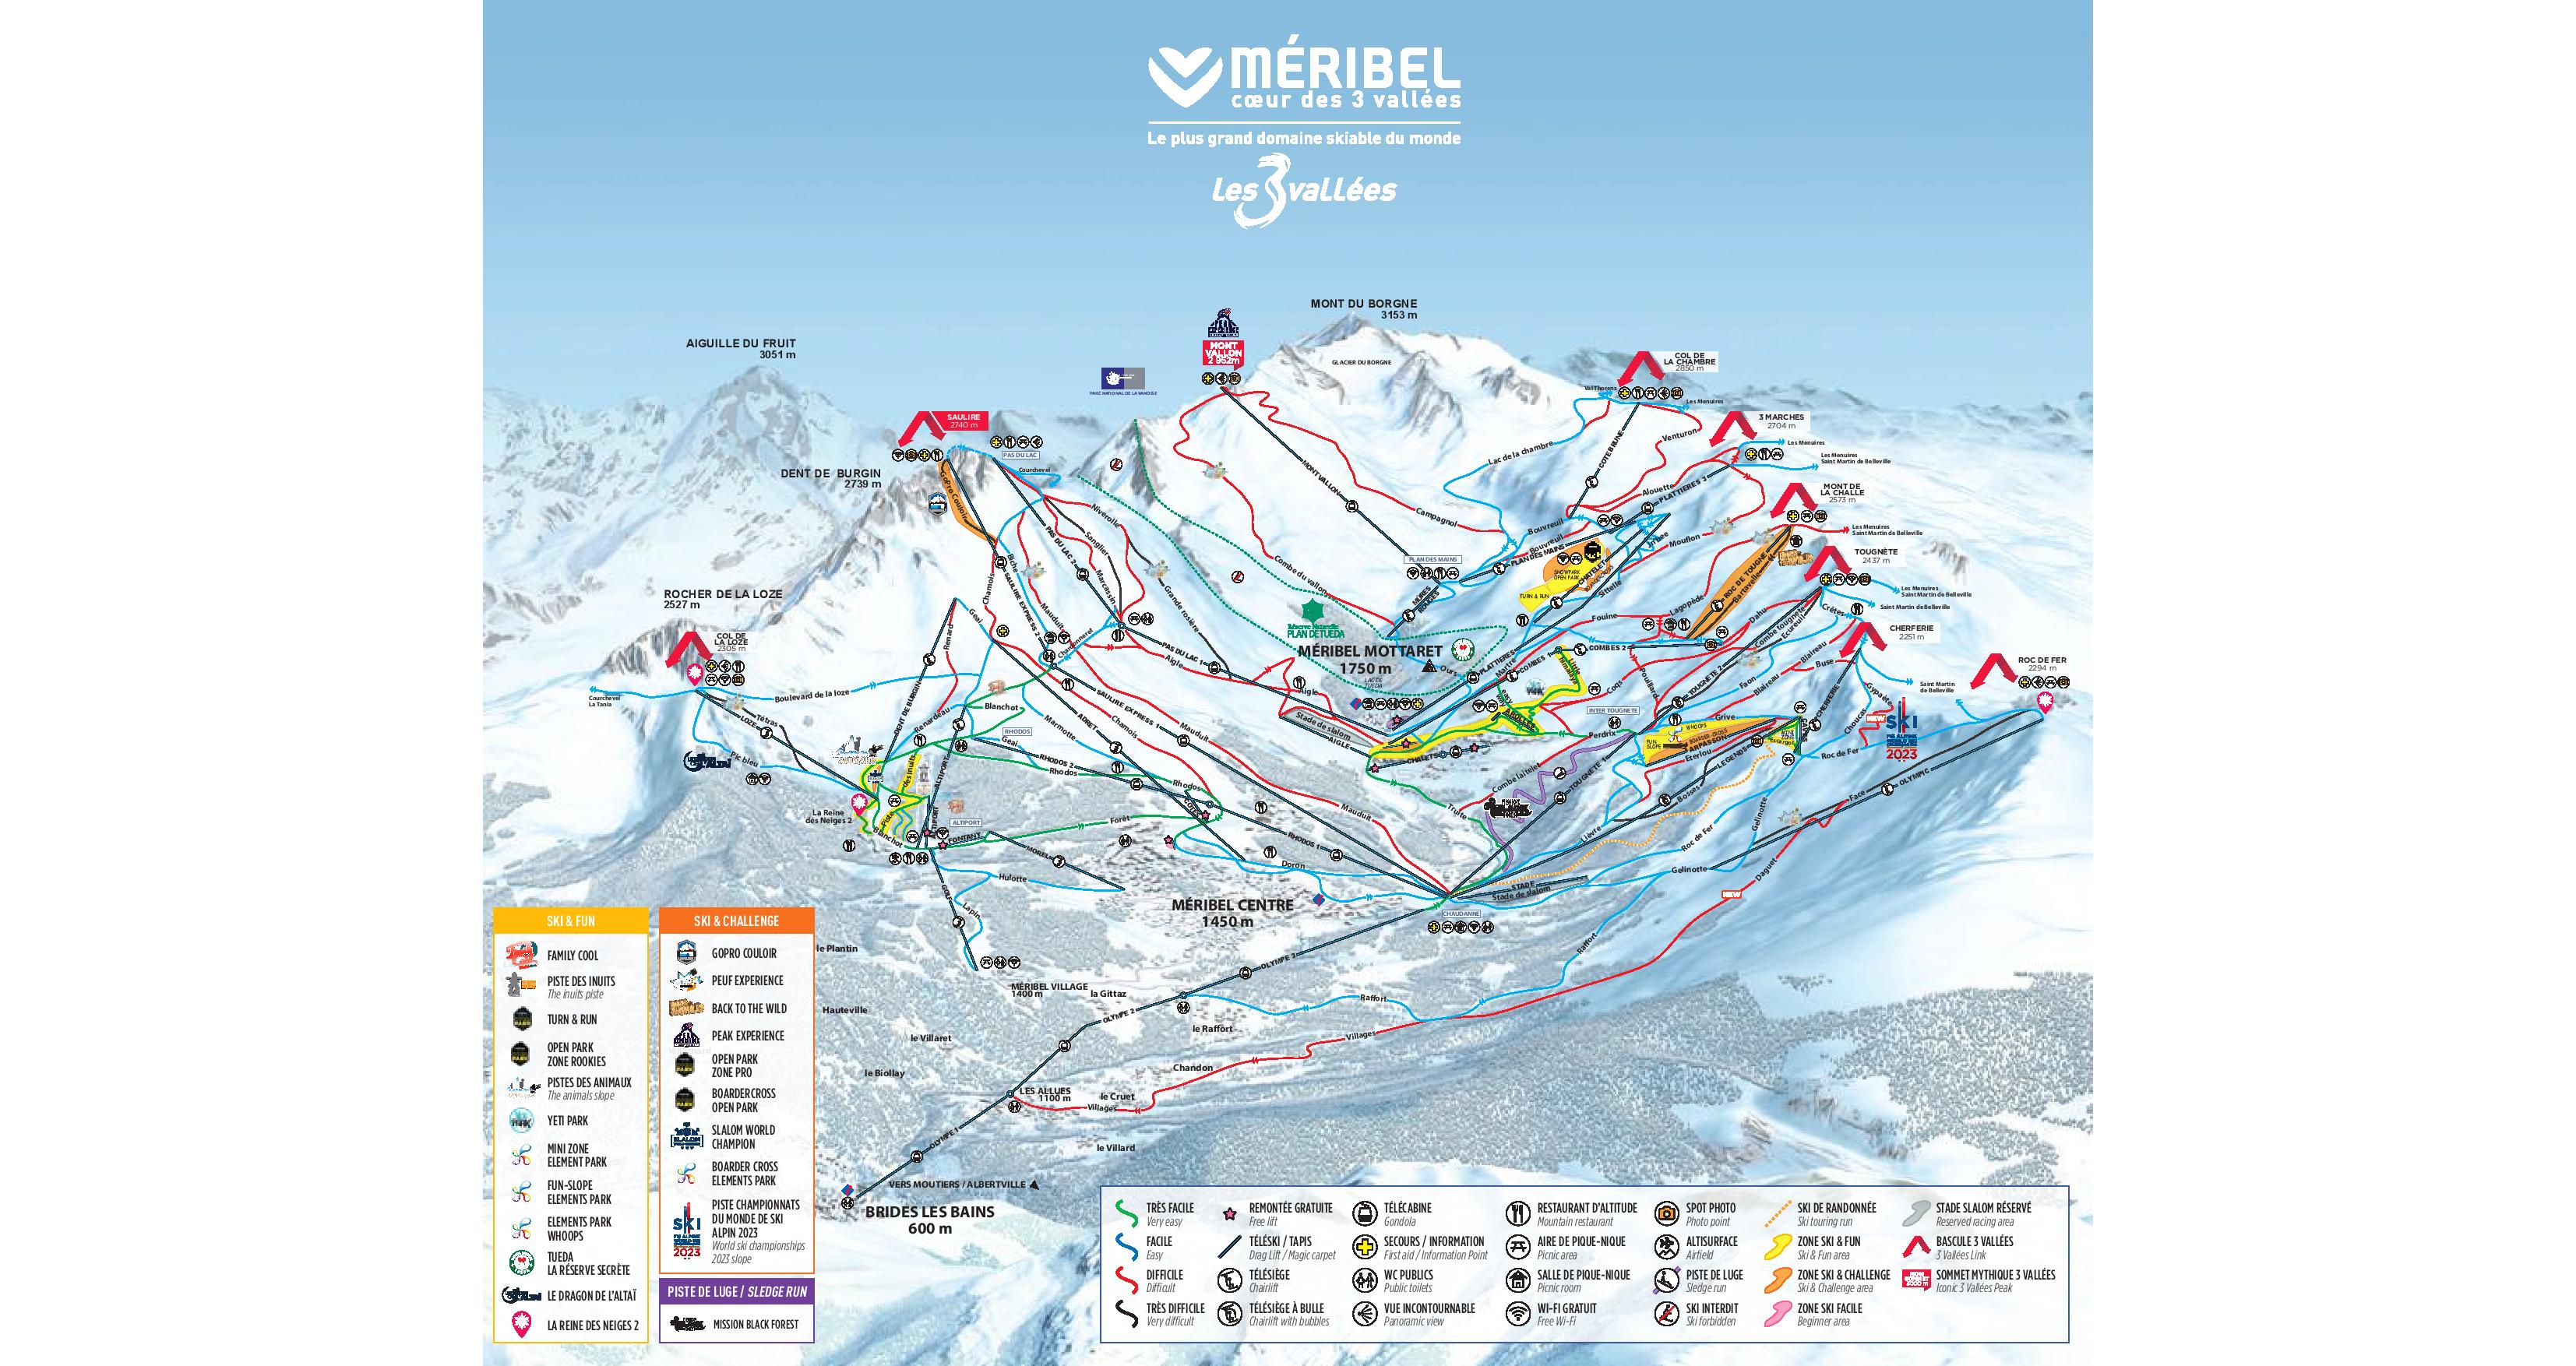 Map of the ski area of Meribel-Mottaret